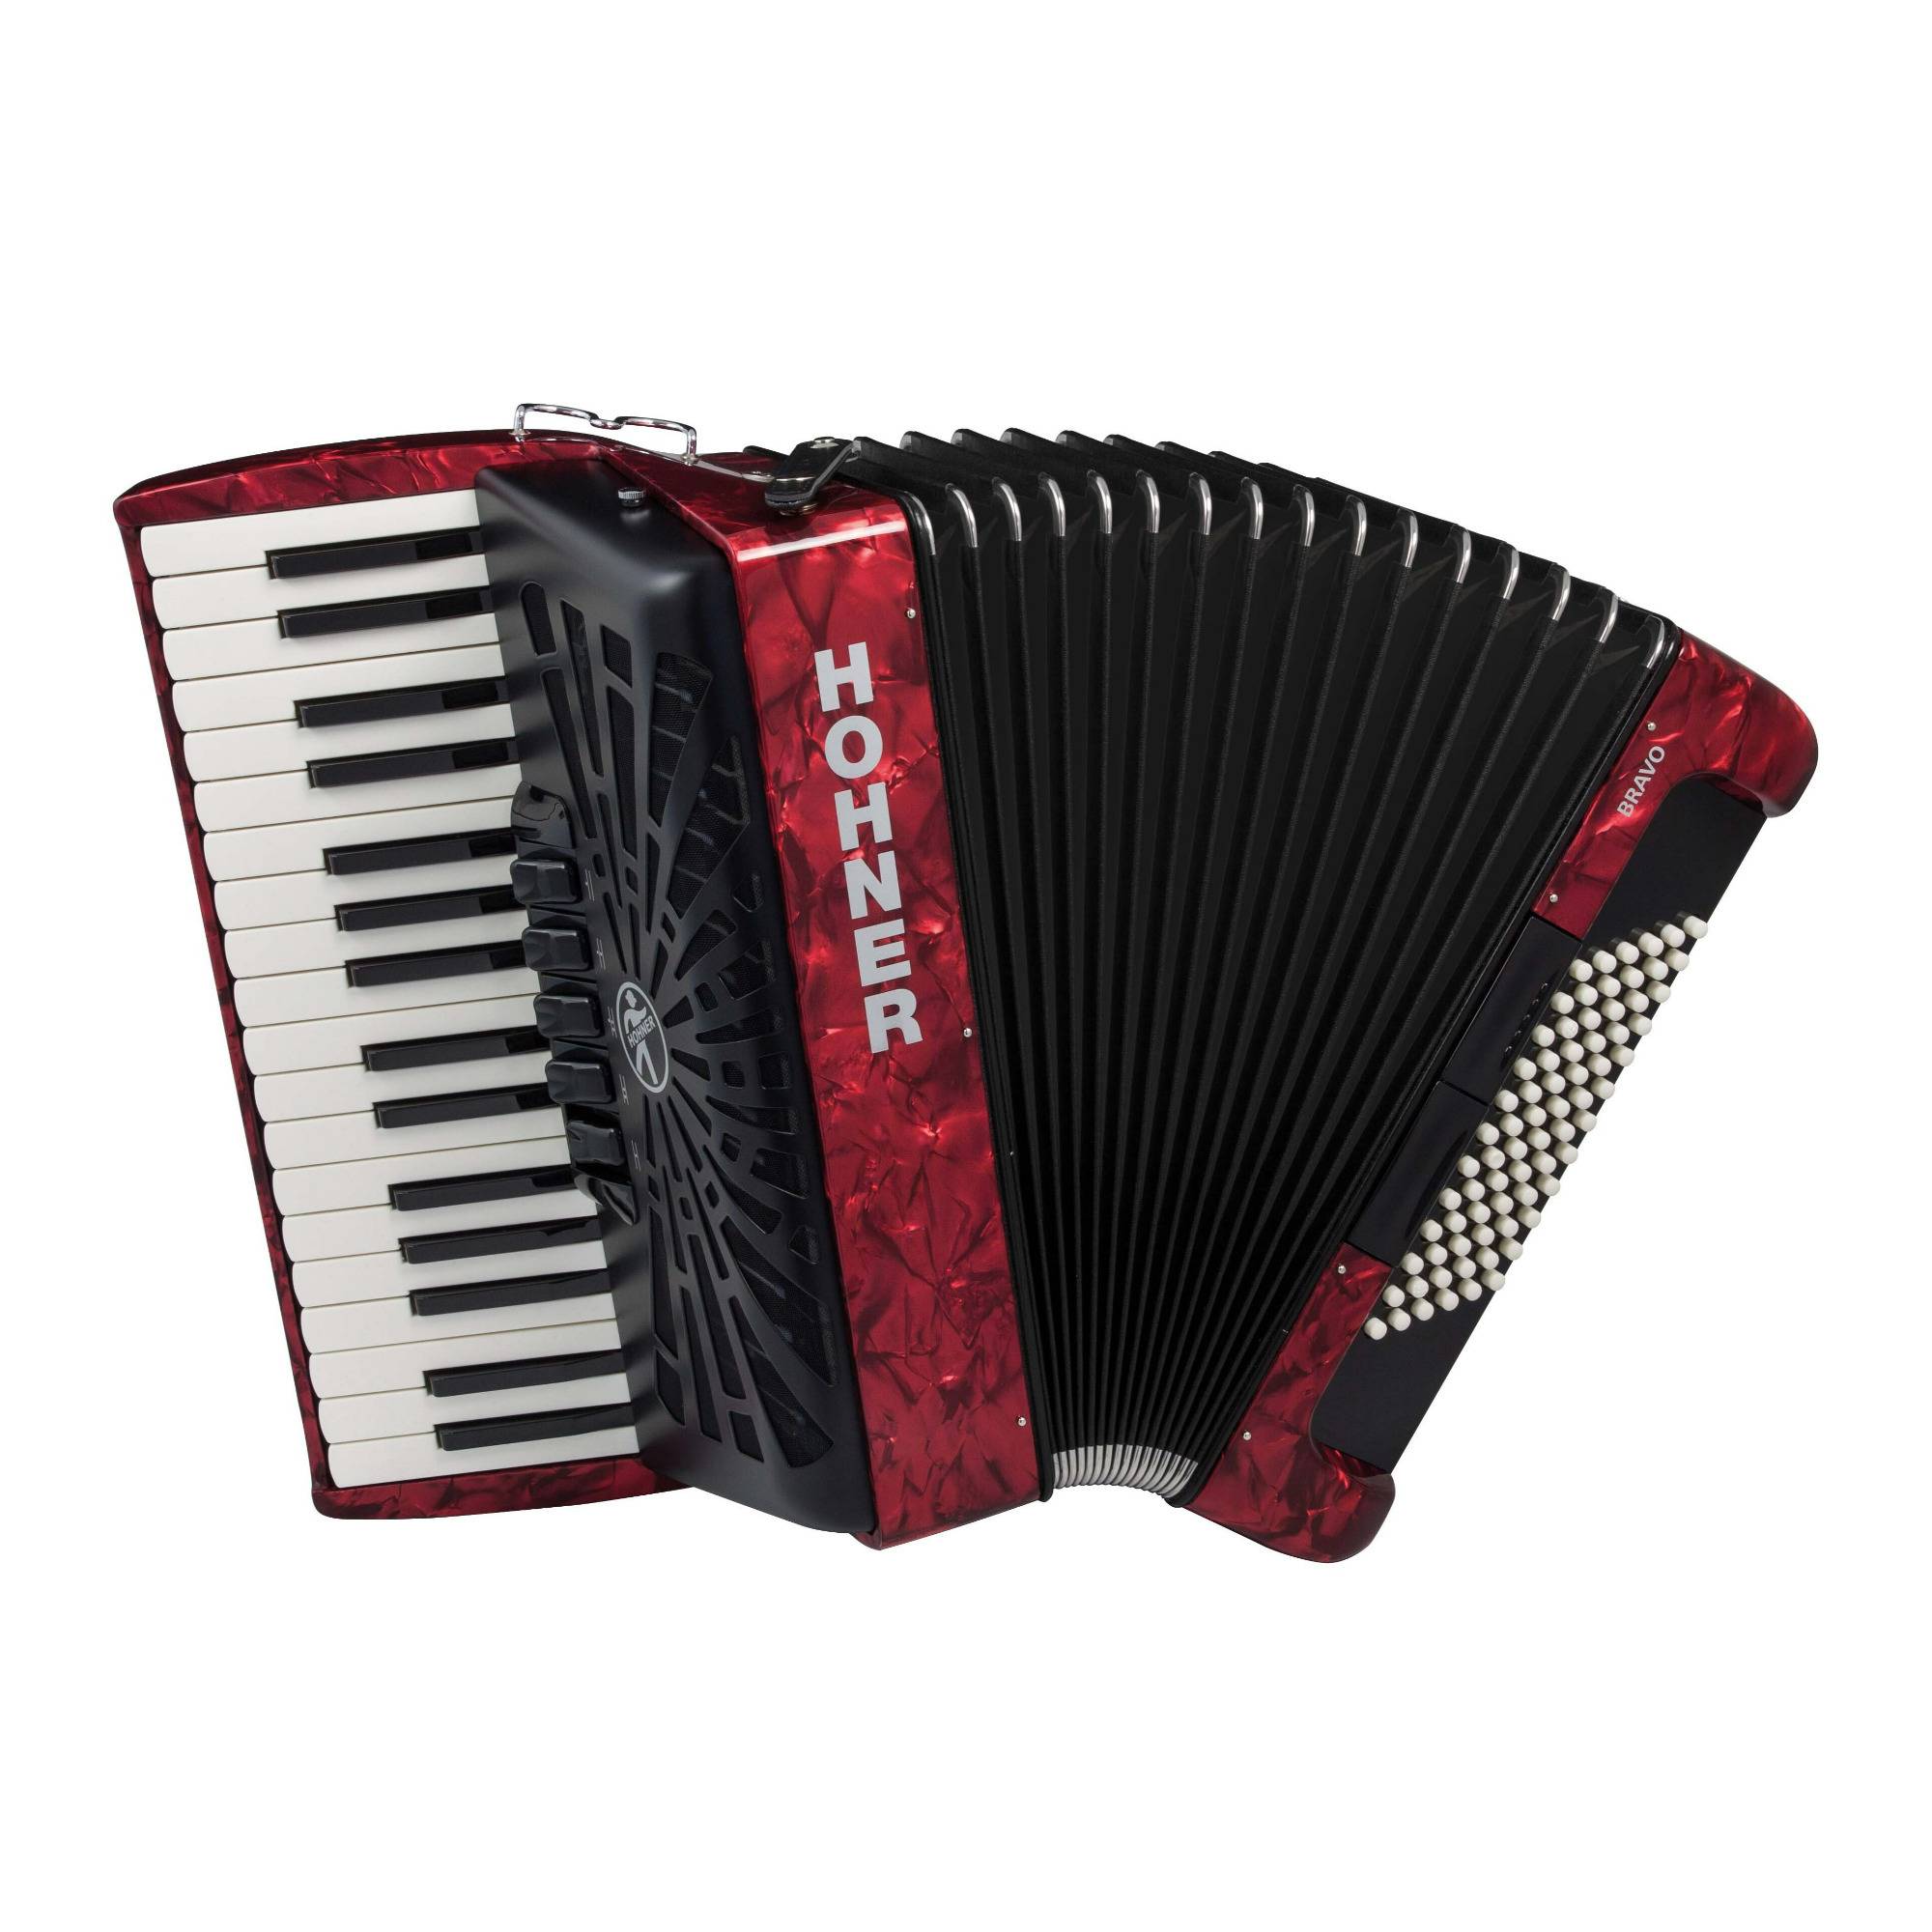 Hohner Bravo III 72 Chromatic Piano Key Accordion (Pearl Red)